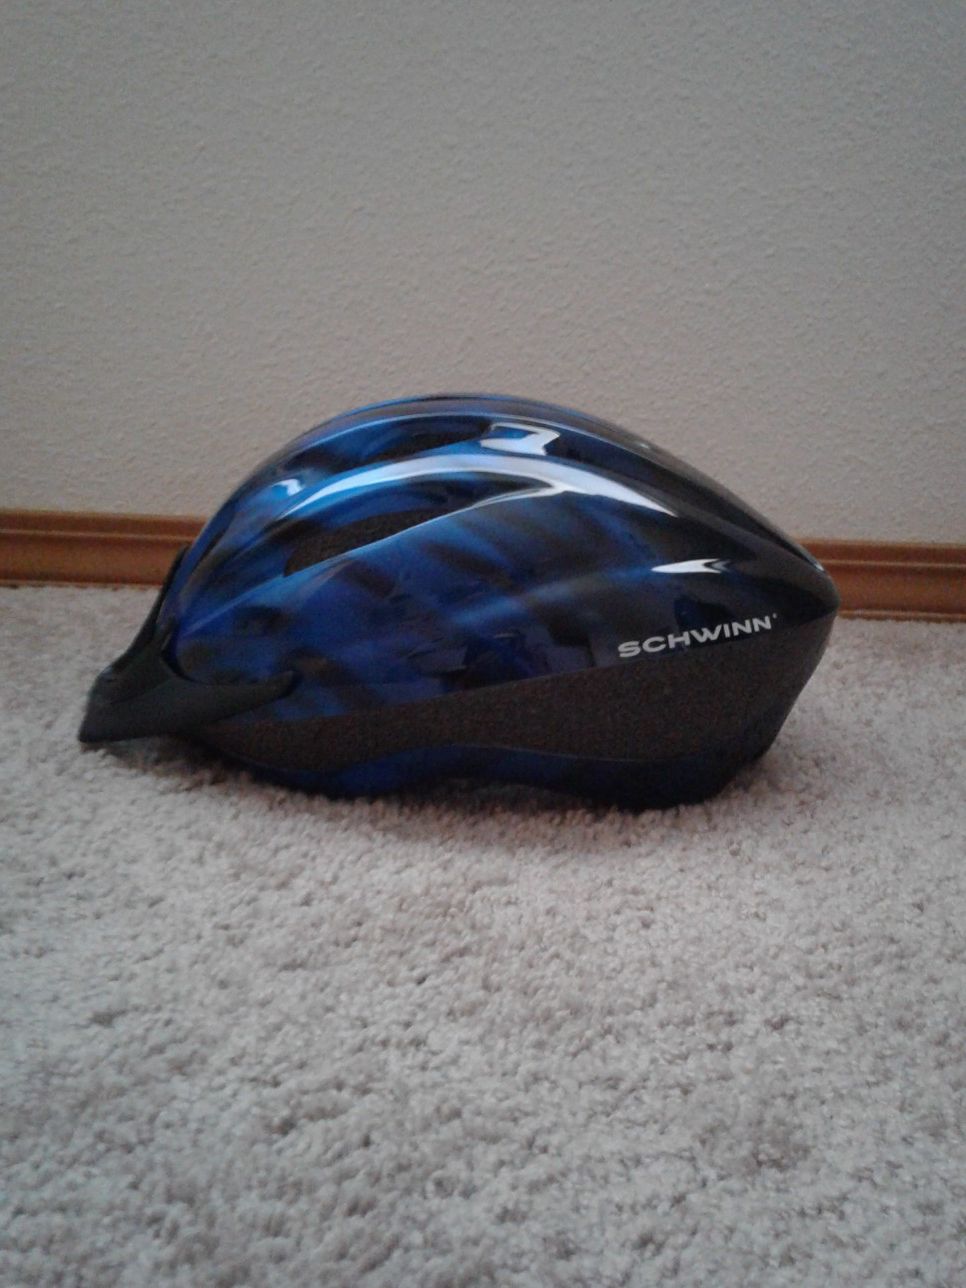 Blue Schwinn bike helmet. Like new ! Only 1200